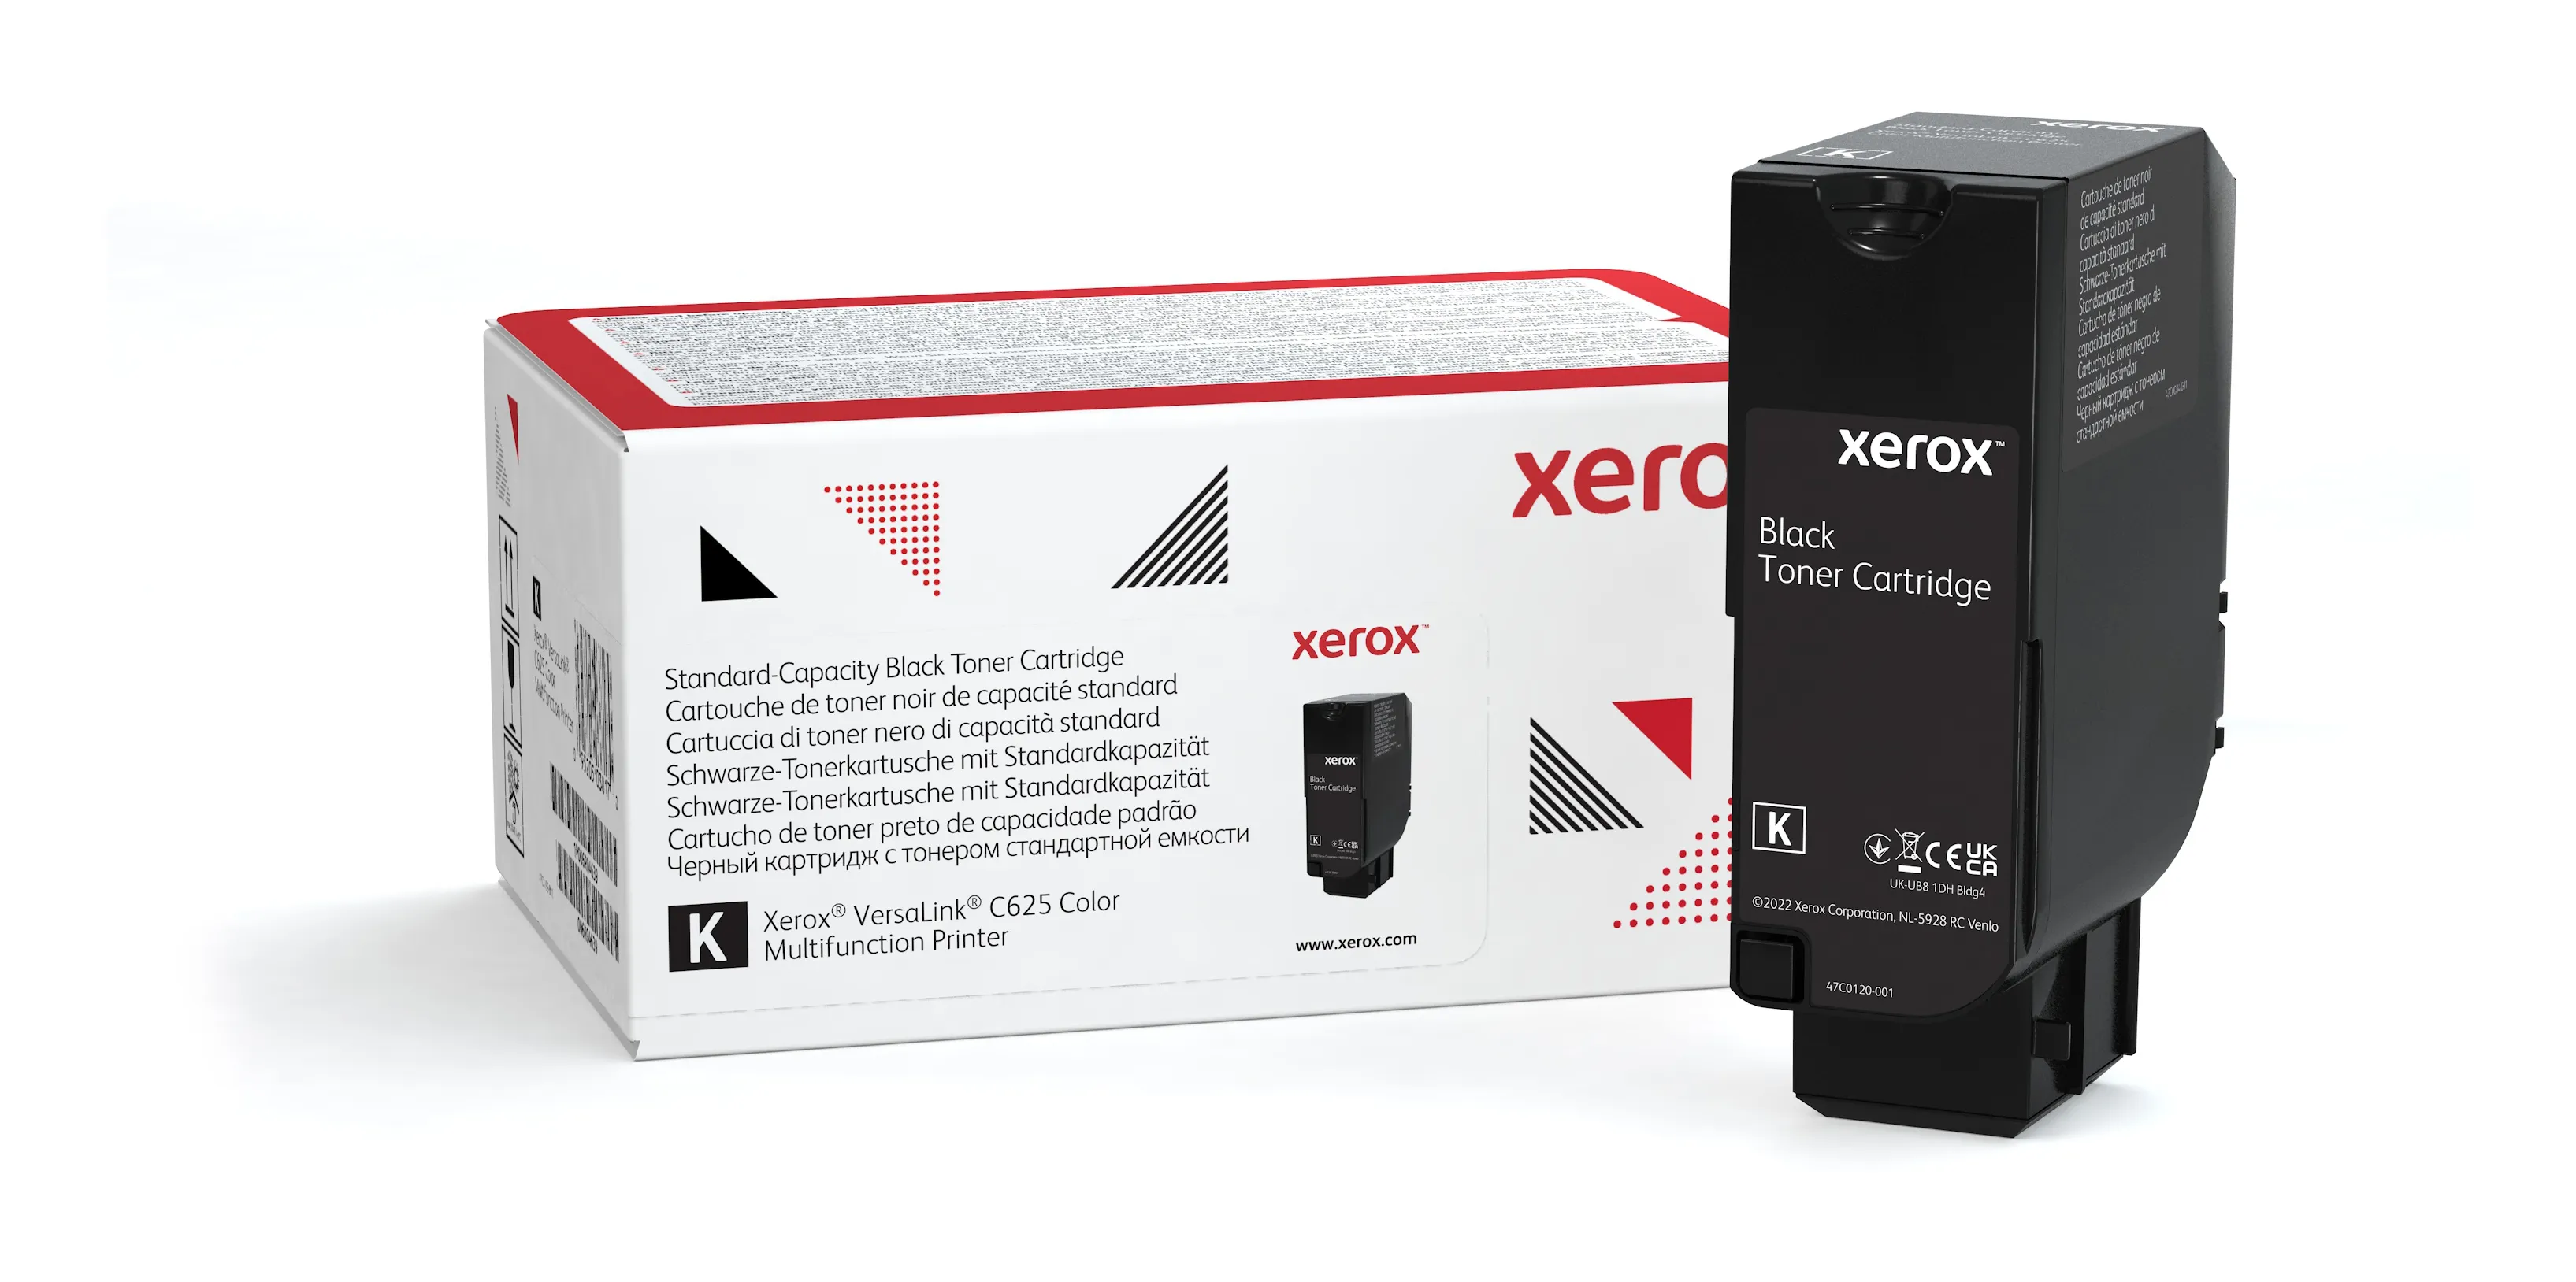 Achat Cartouche de toner Noir de Capacité standard Xerox - 0095205037883